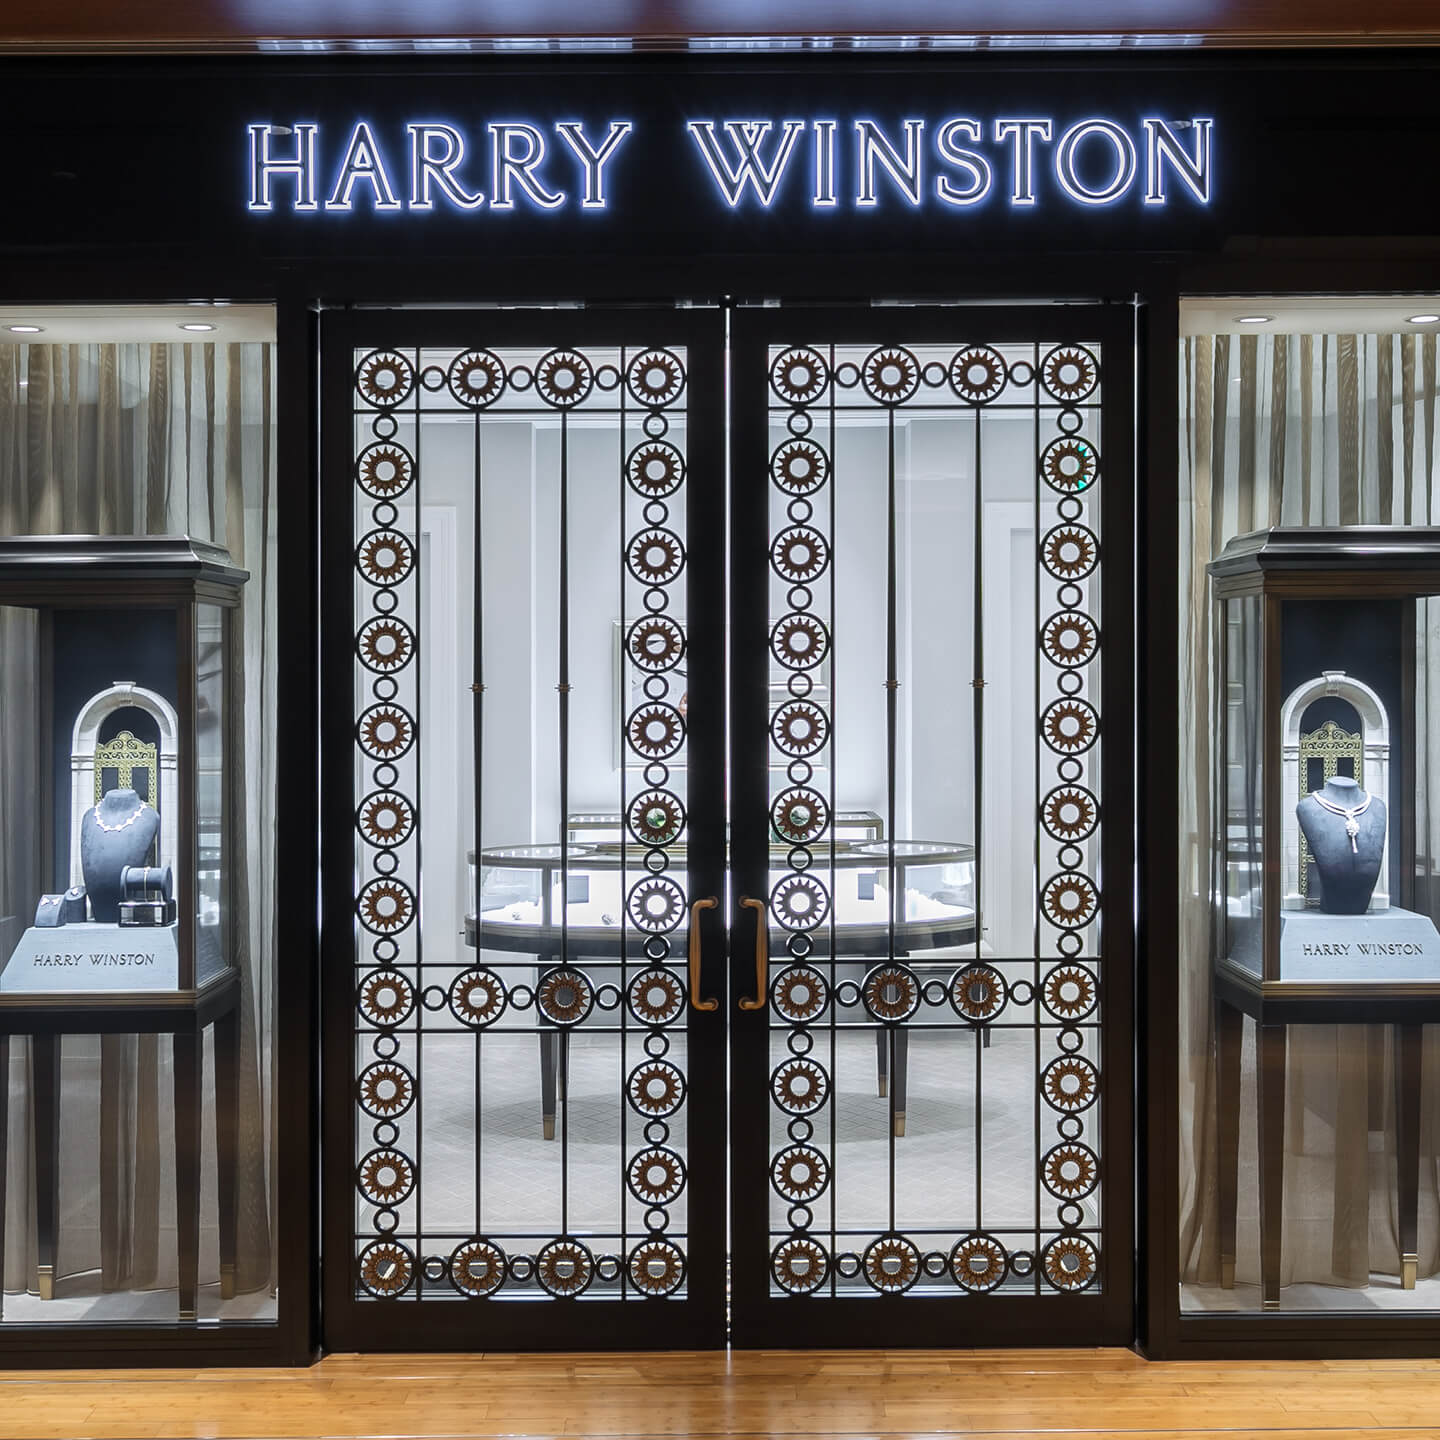 Façade of the Harry Winston Tokyo Midtown Salon